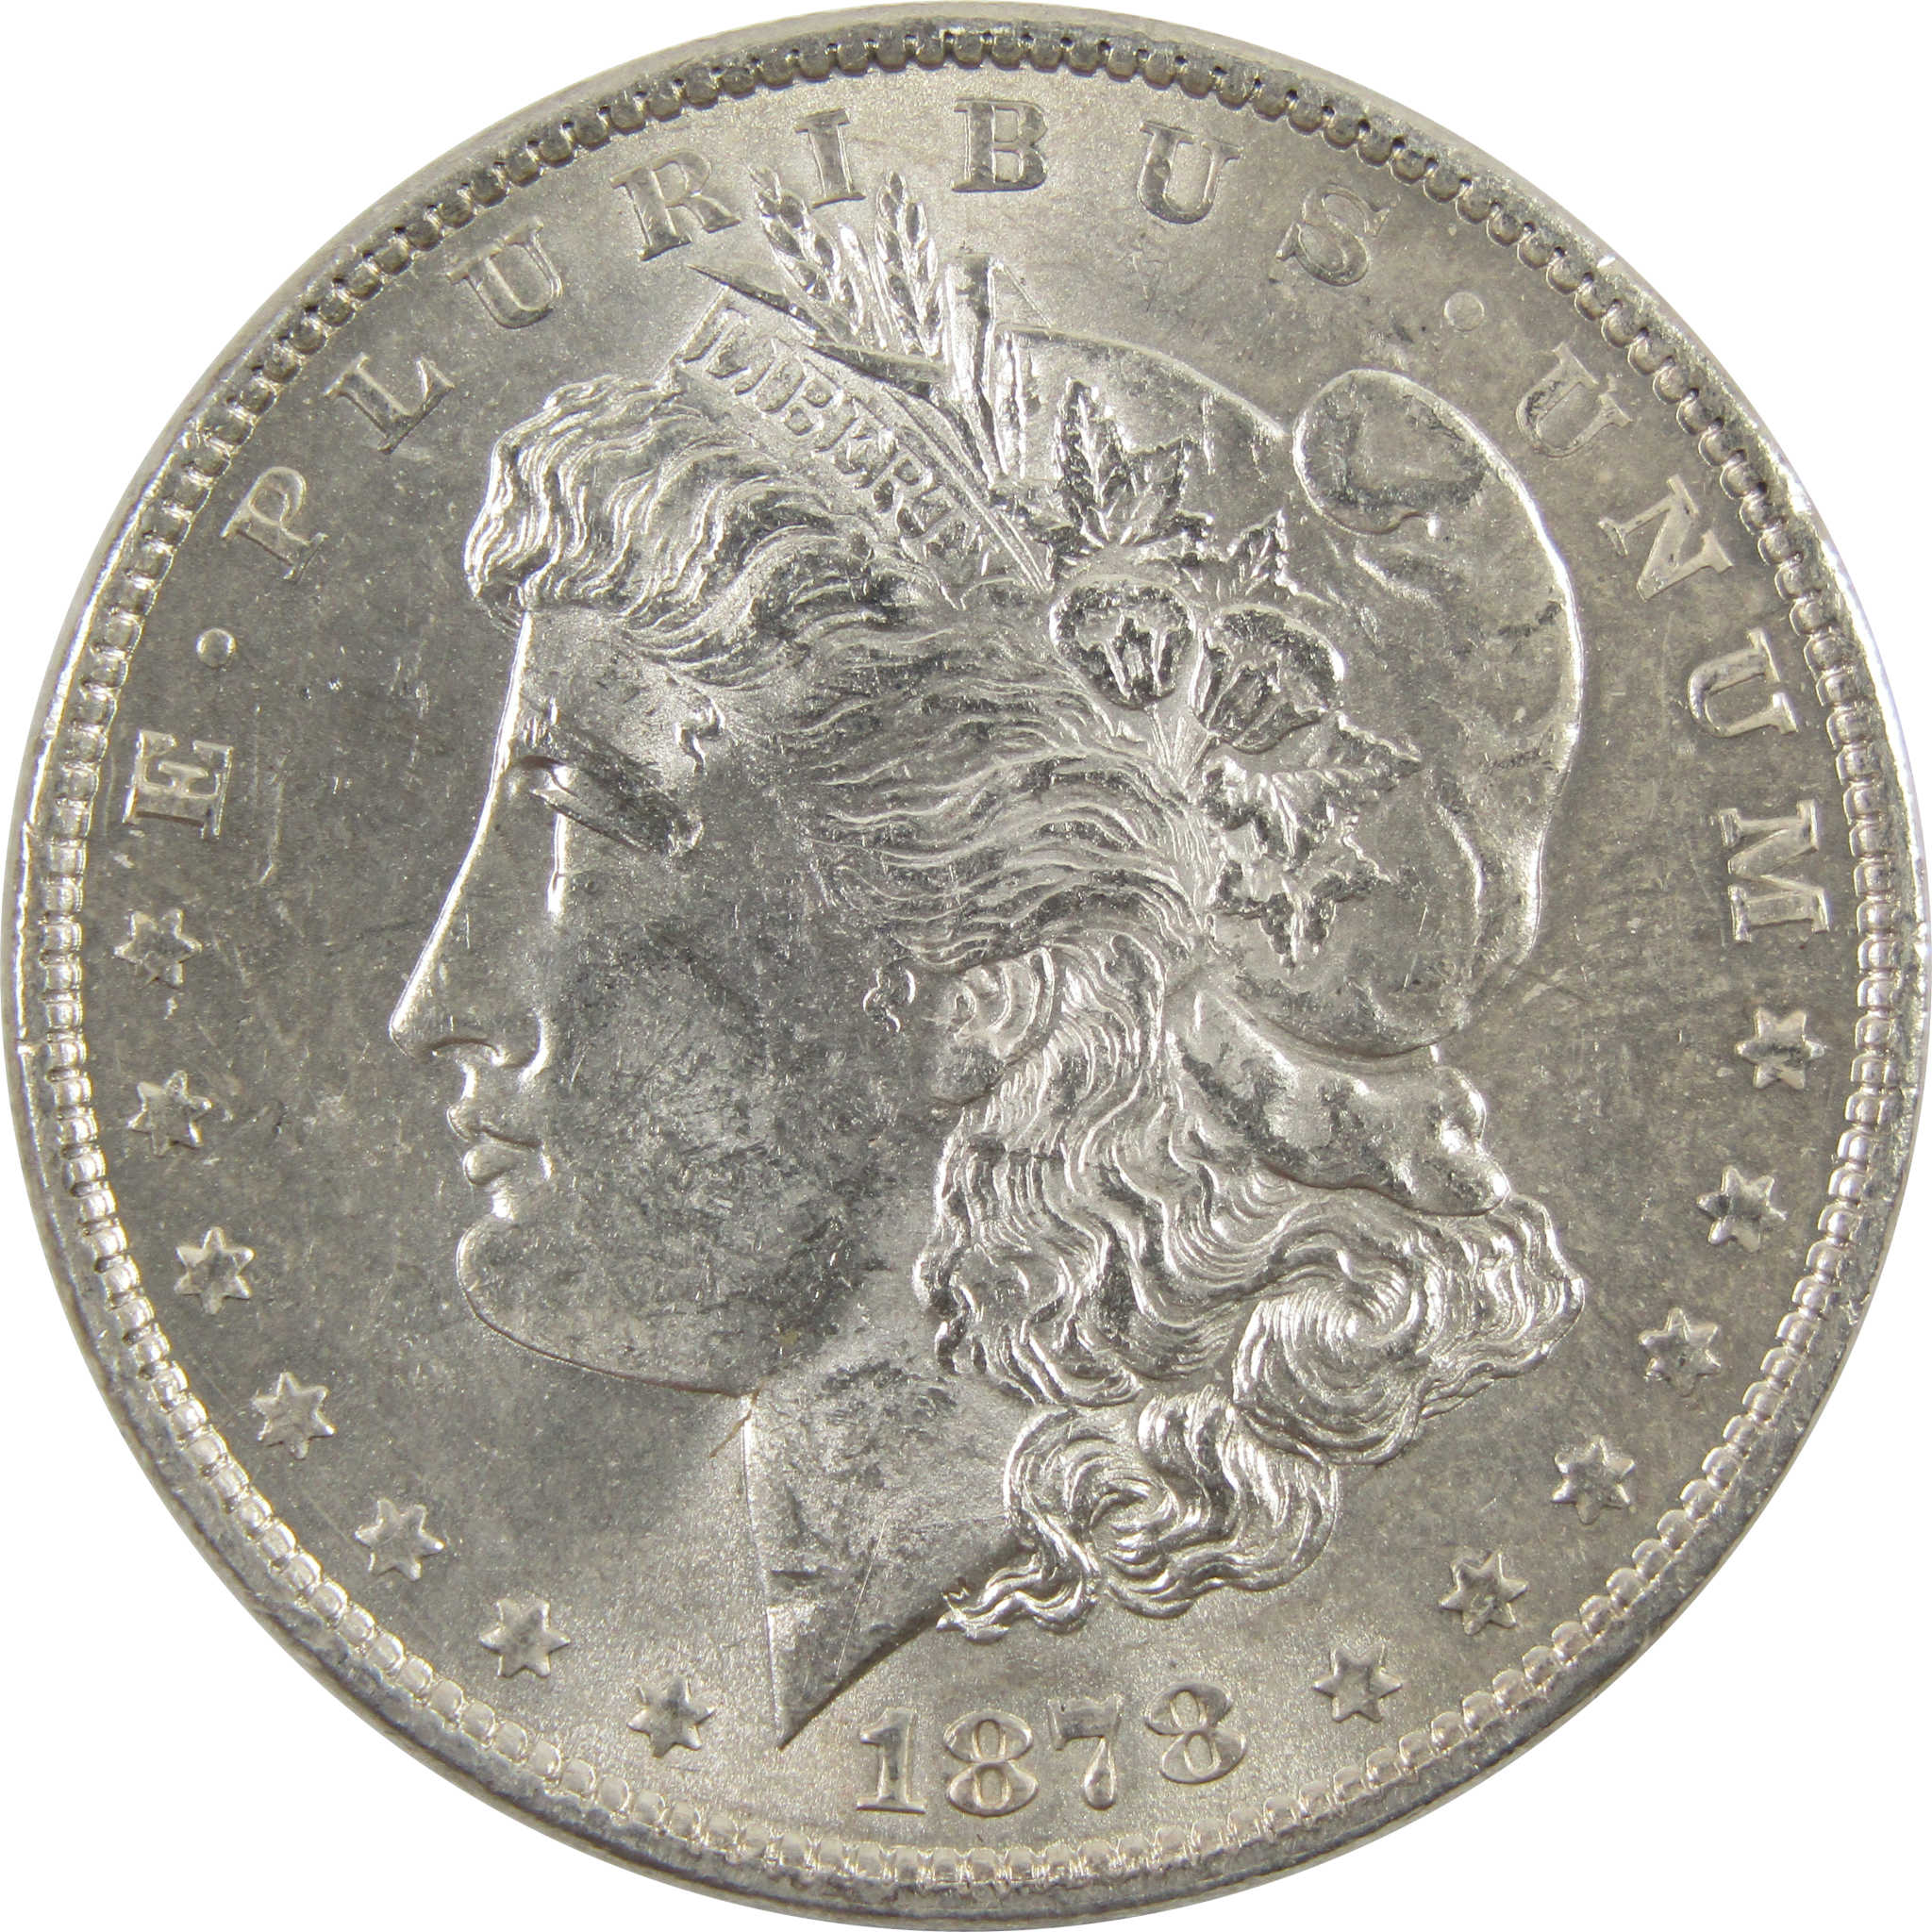 1878 7TF Rev 79 Morgan Dollar Borderline Uncirculated SKU:I11140 - Morgan coin - Morgan silver dollar - Morgan silver dollar for sale - Profile Coins &amp; Collectibles